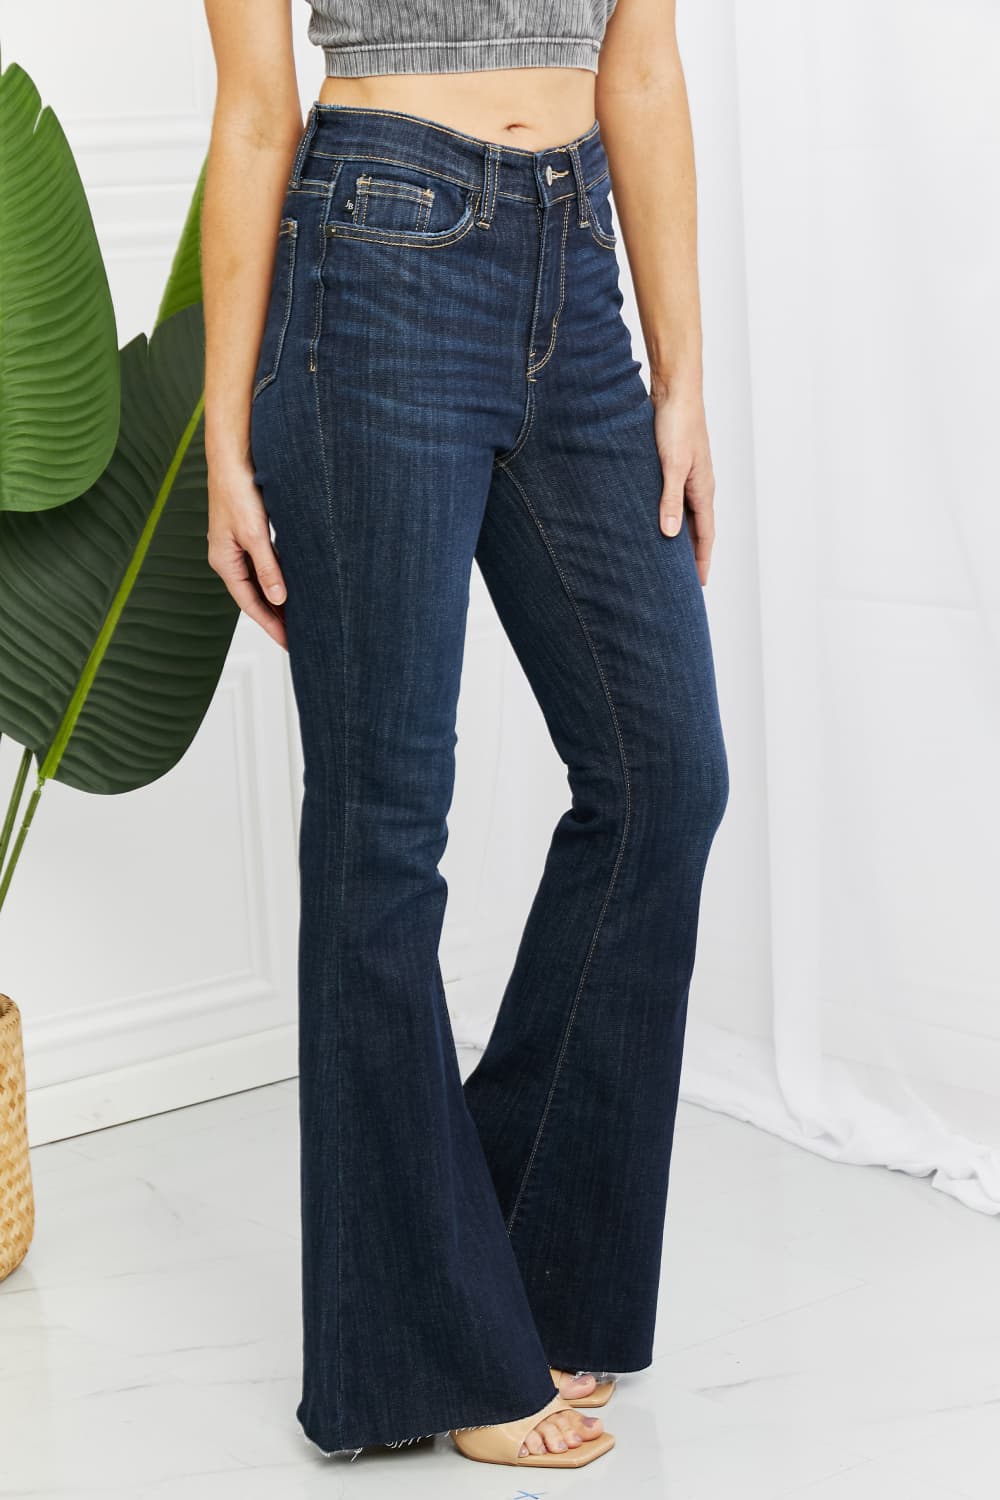 Judy Blue Denim Mid Rise Flare Jeans